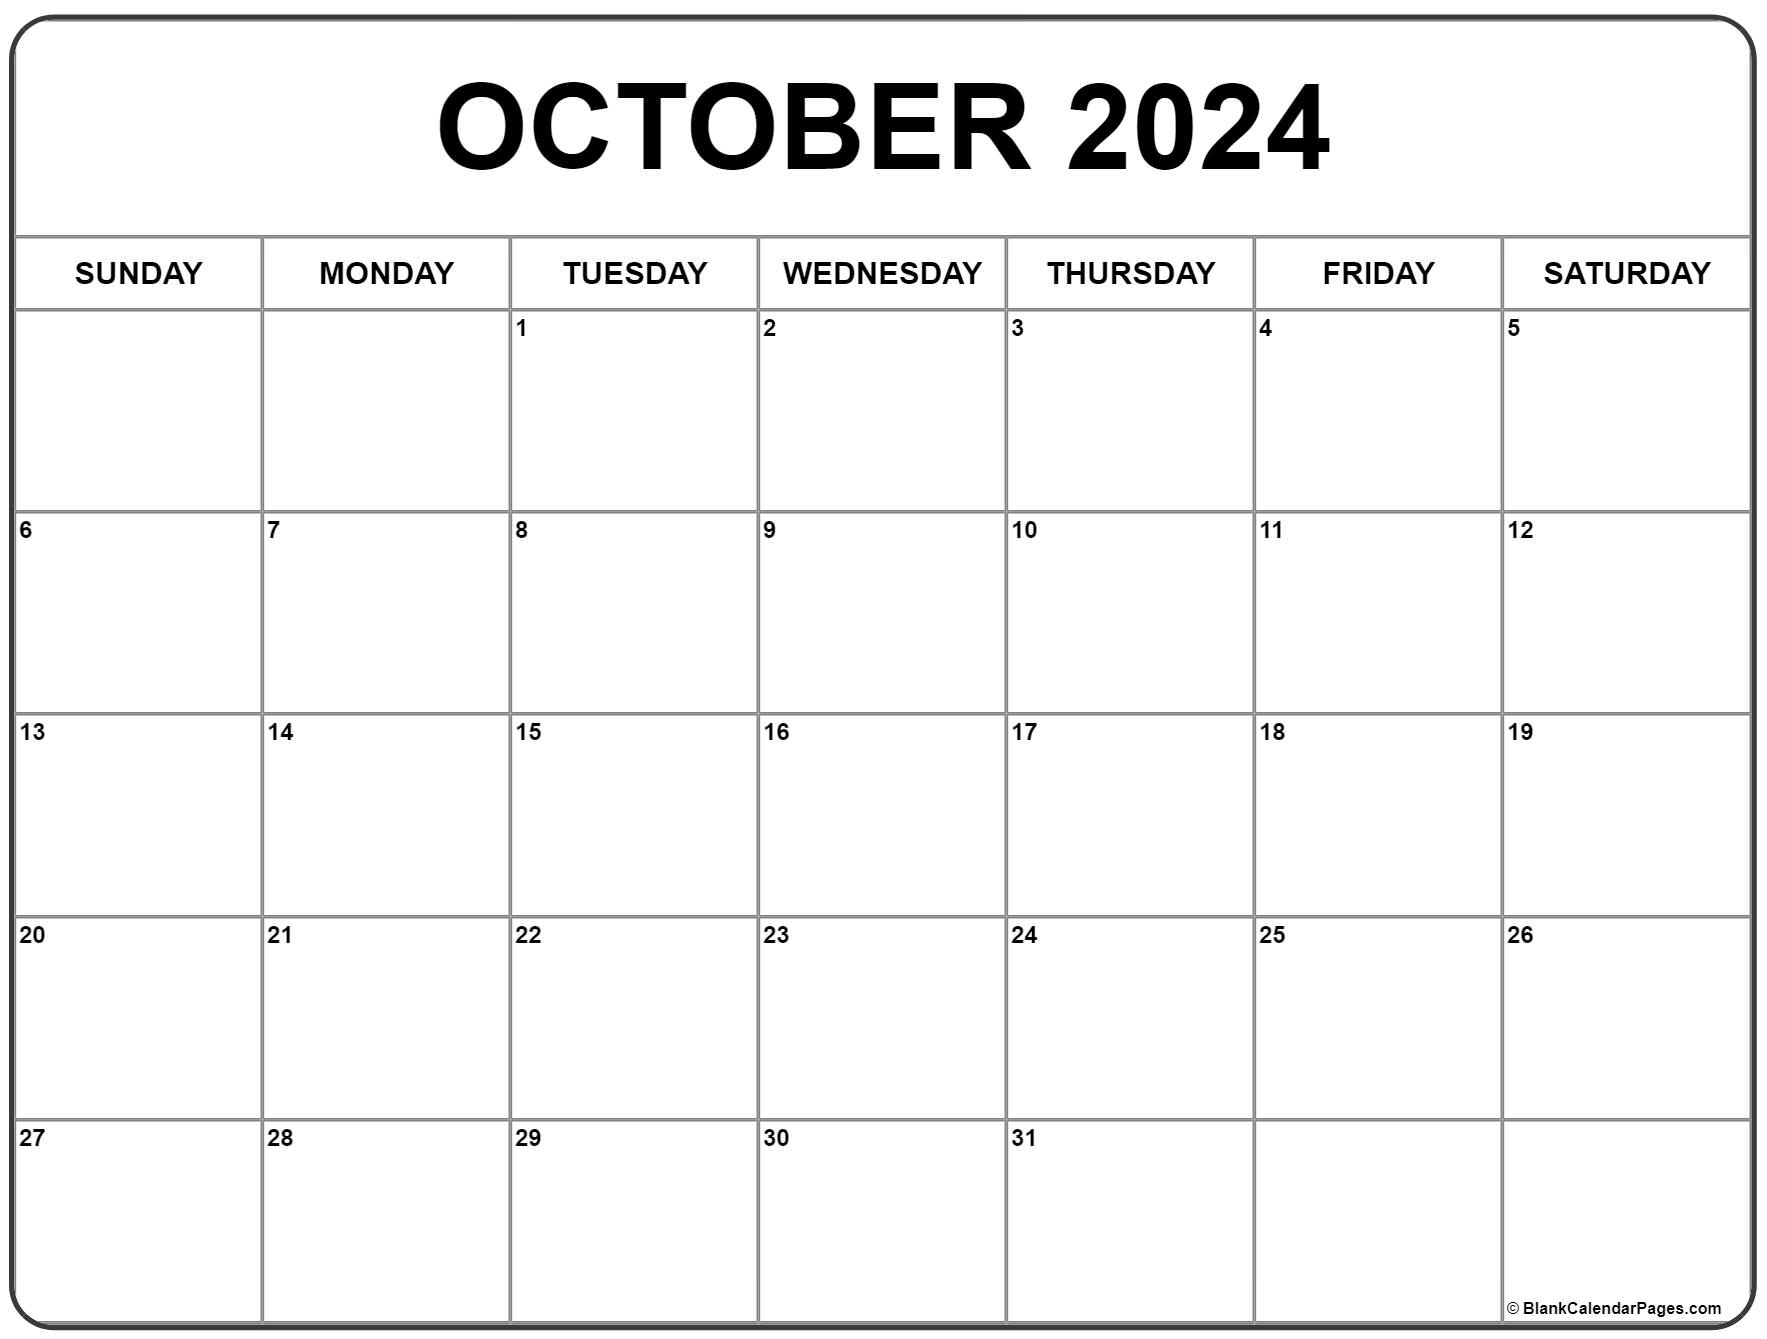 October 2024 Calendar | Free Printable Calendar for Free Printable October Calendar 2024